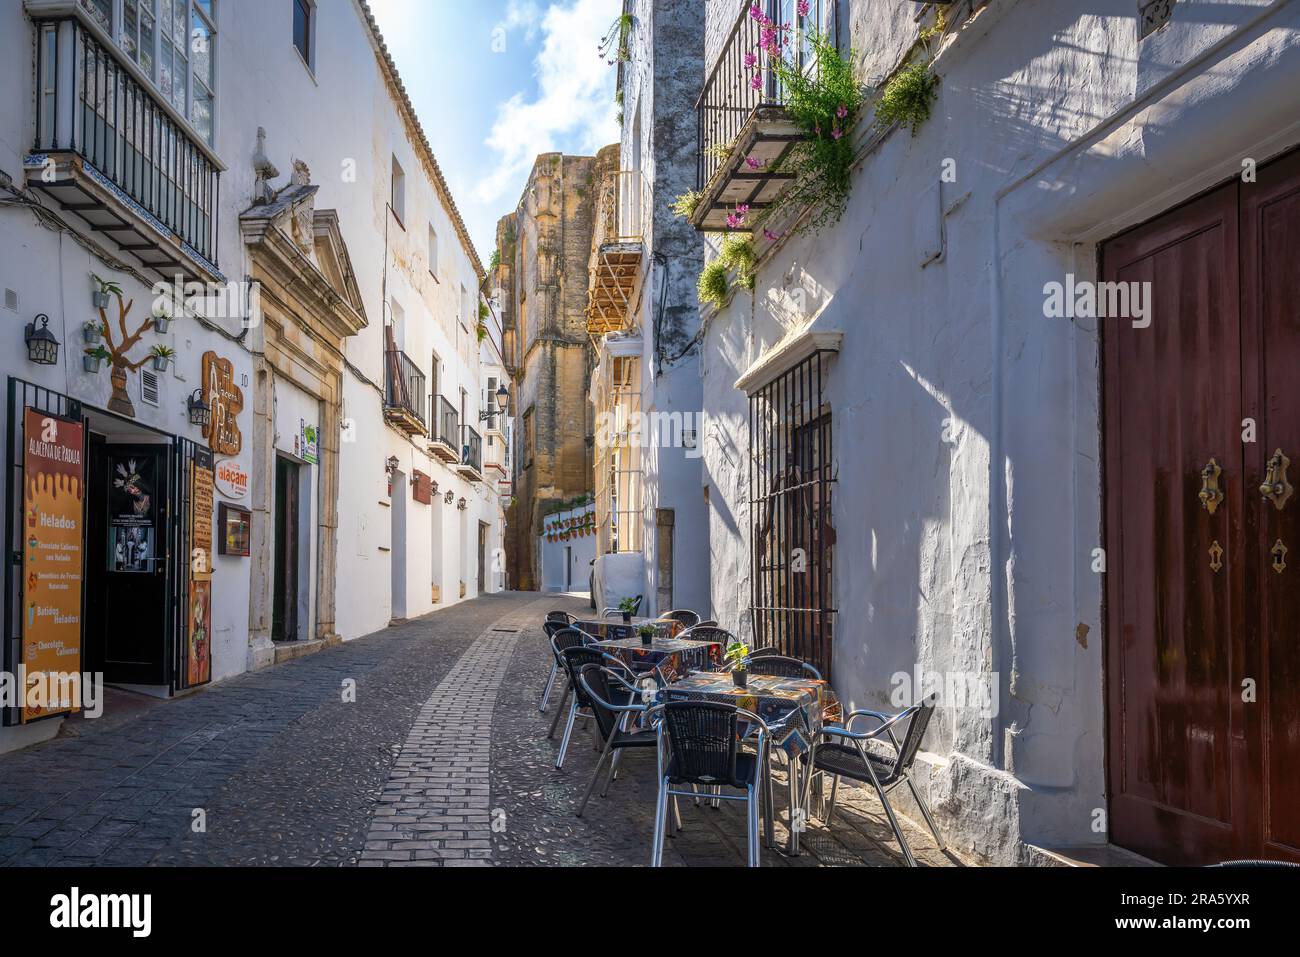 Streets with restaurants - Arcos de la Frontera, Cadiz, Spain Stock Photo